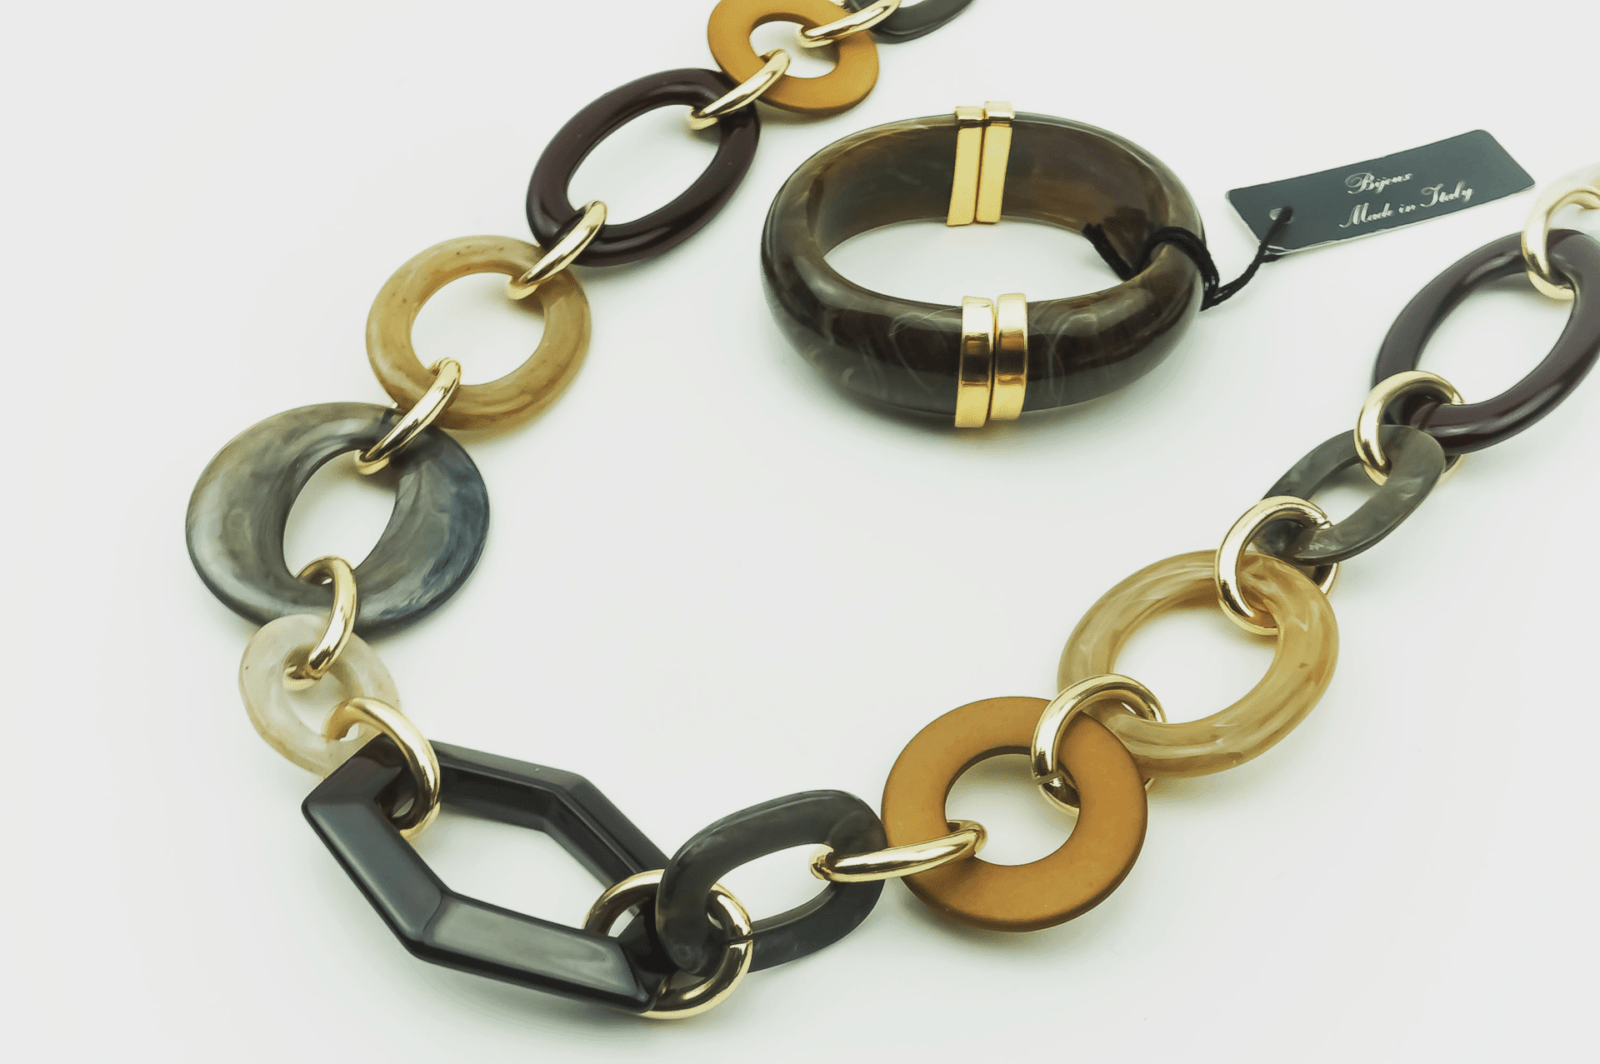 Stylish chain necklace, bracelet, clips earrings, set, present, gift,buy online, kopen www.axelles-fashion.com